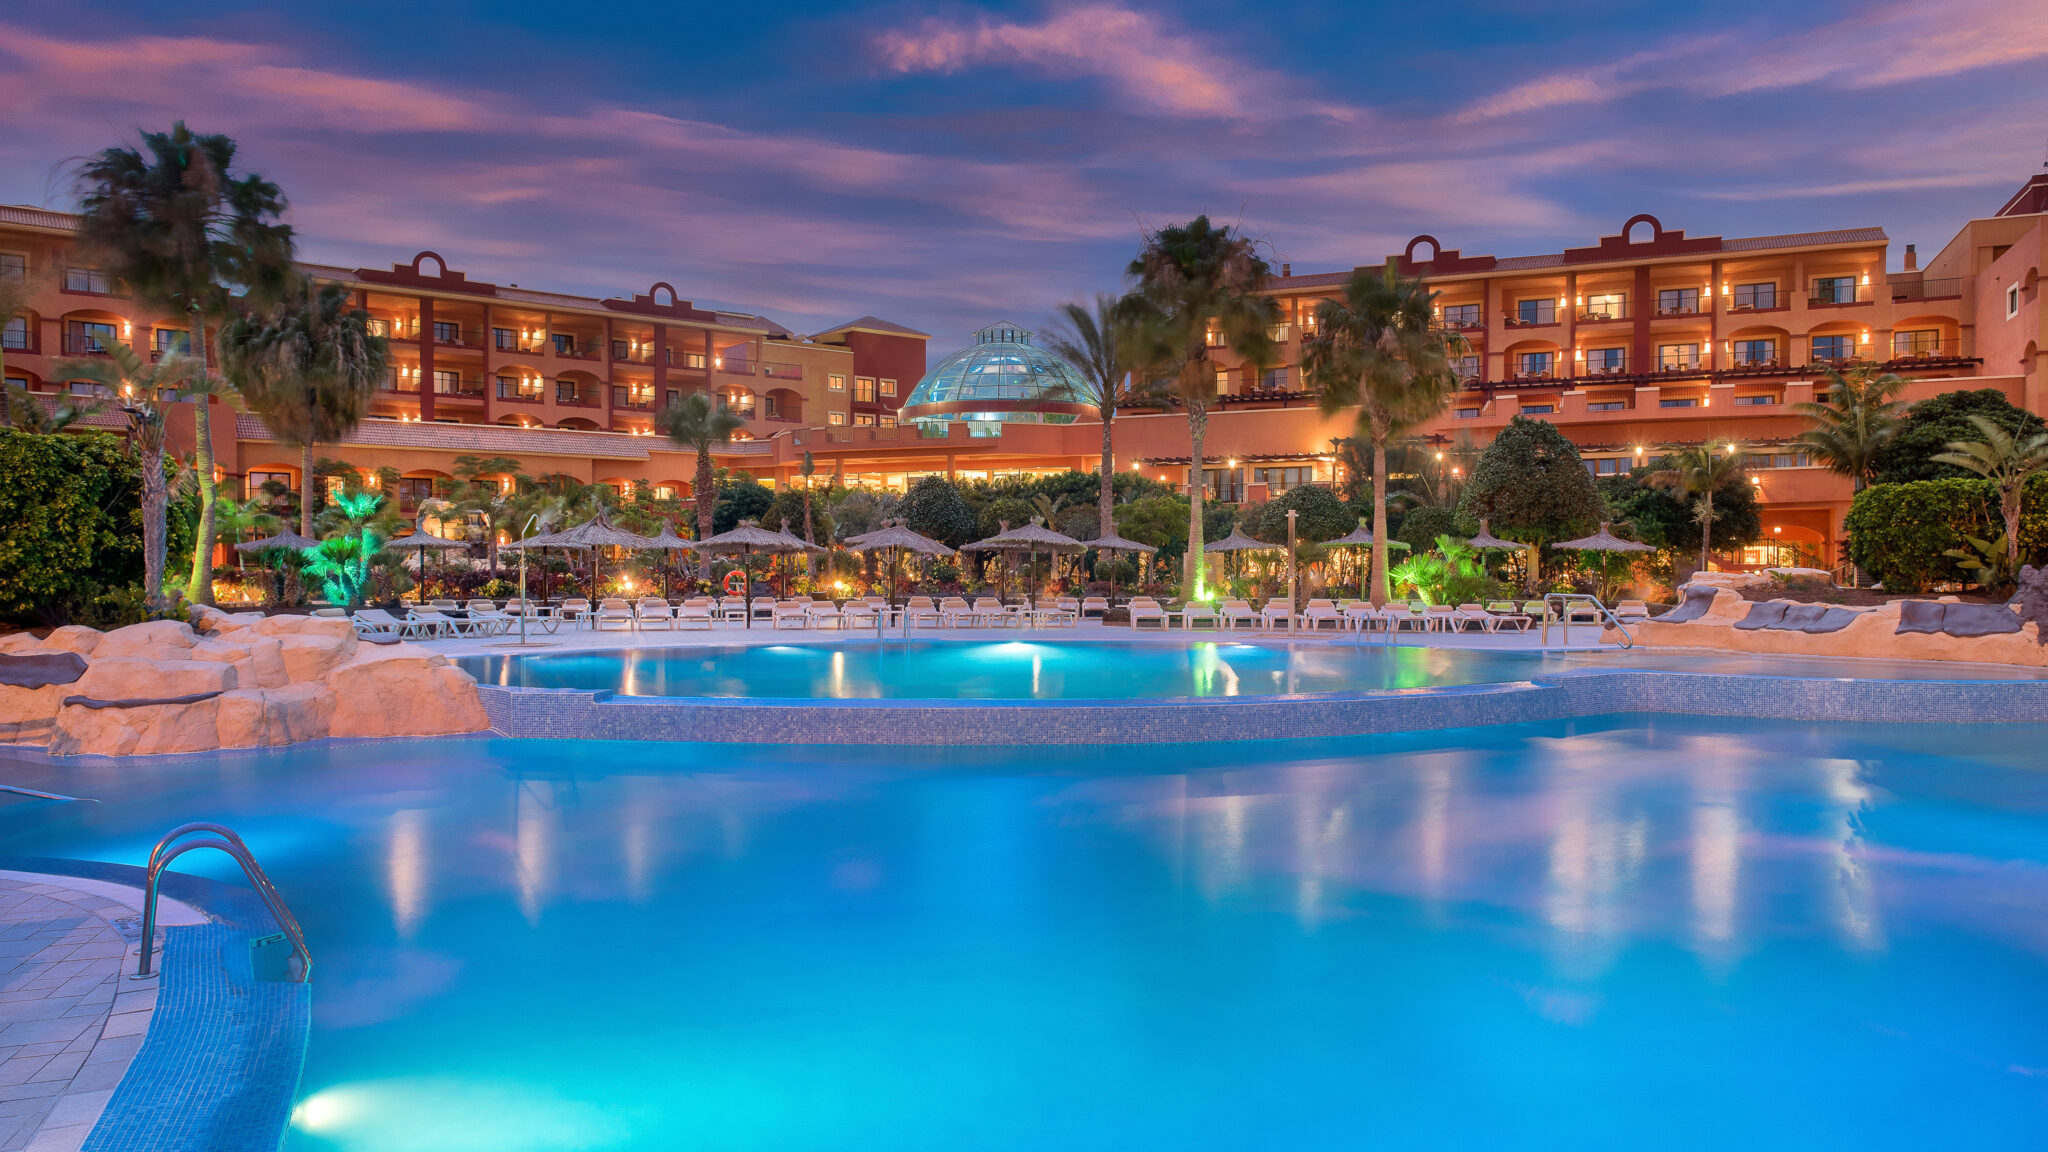 Sheraton Fuerteventura Beach Golf and Spa Resort is a perfect hotel golf resort & spa